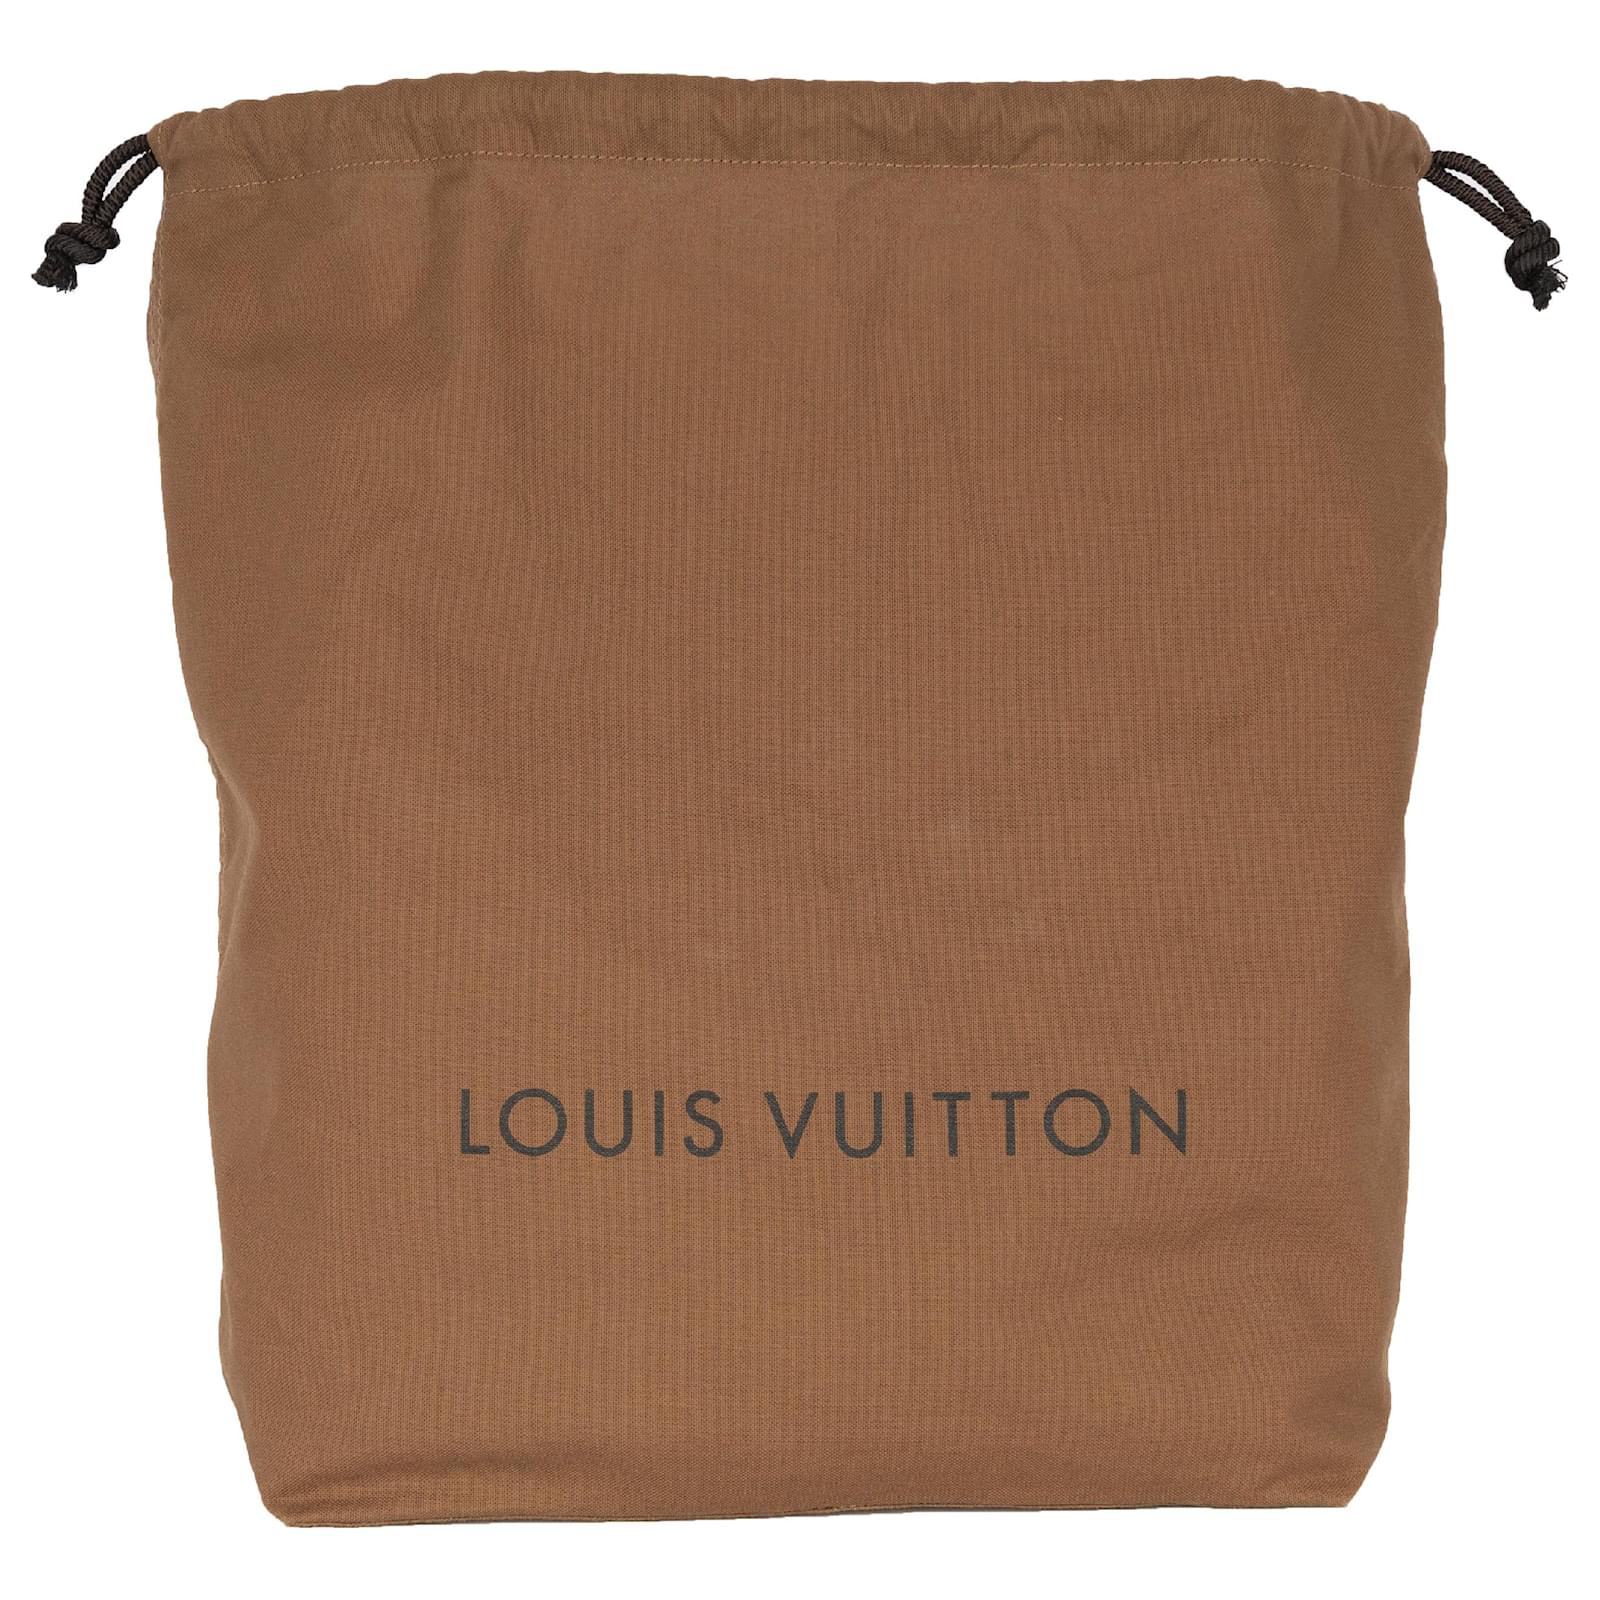 Louis Vuitton Large Drawstring Dust Bag